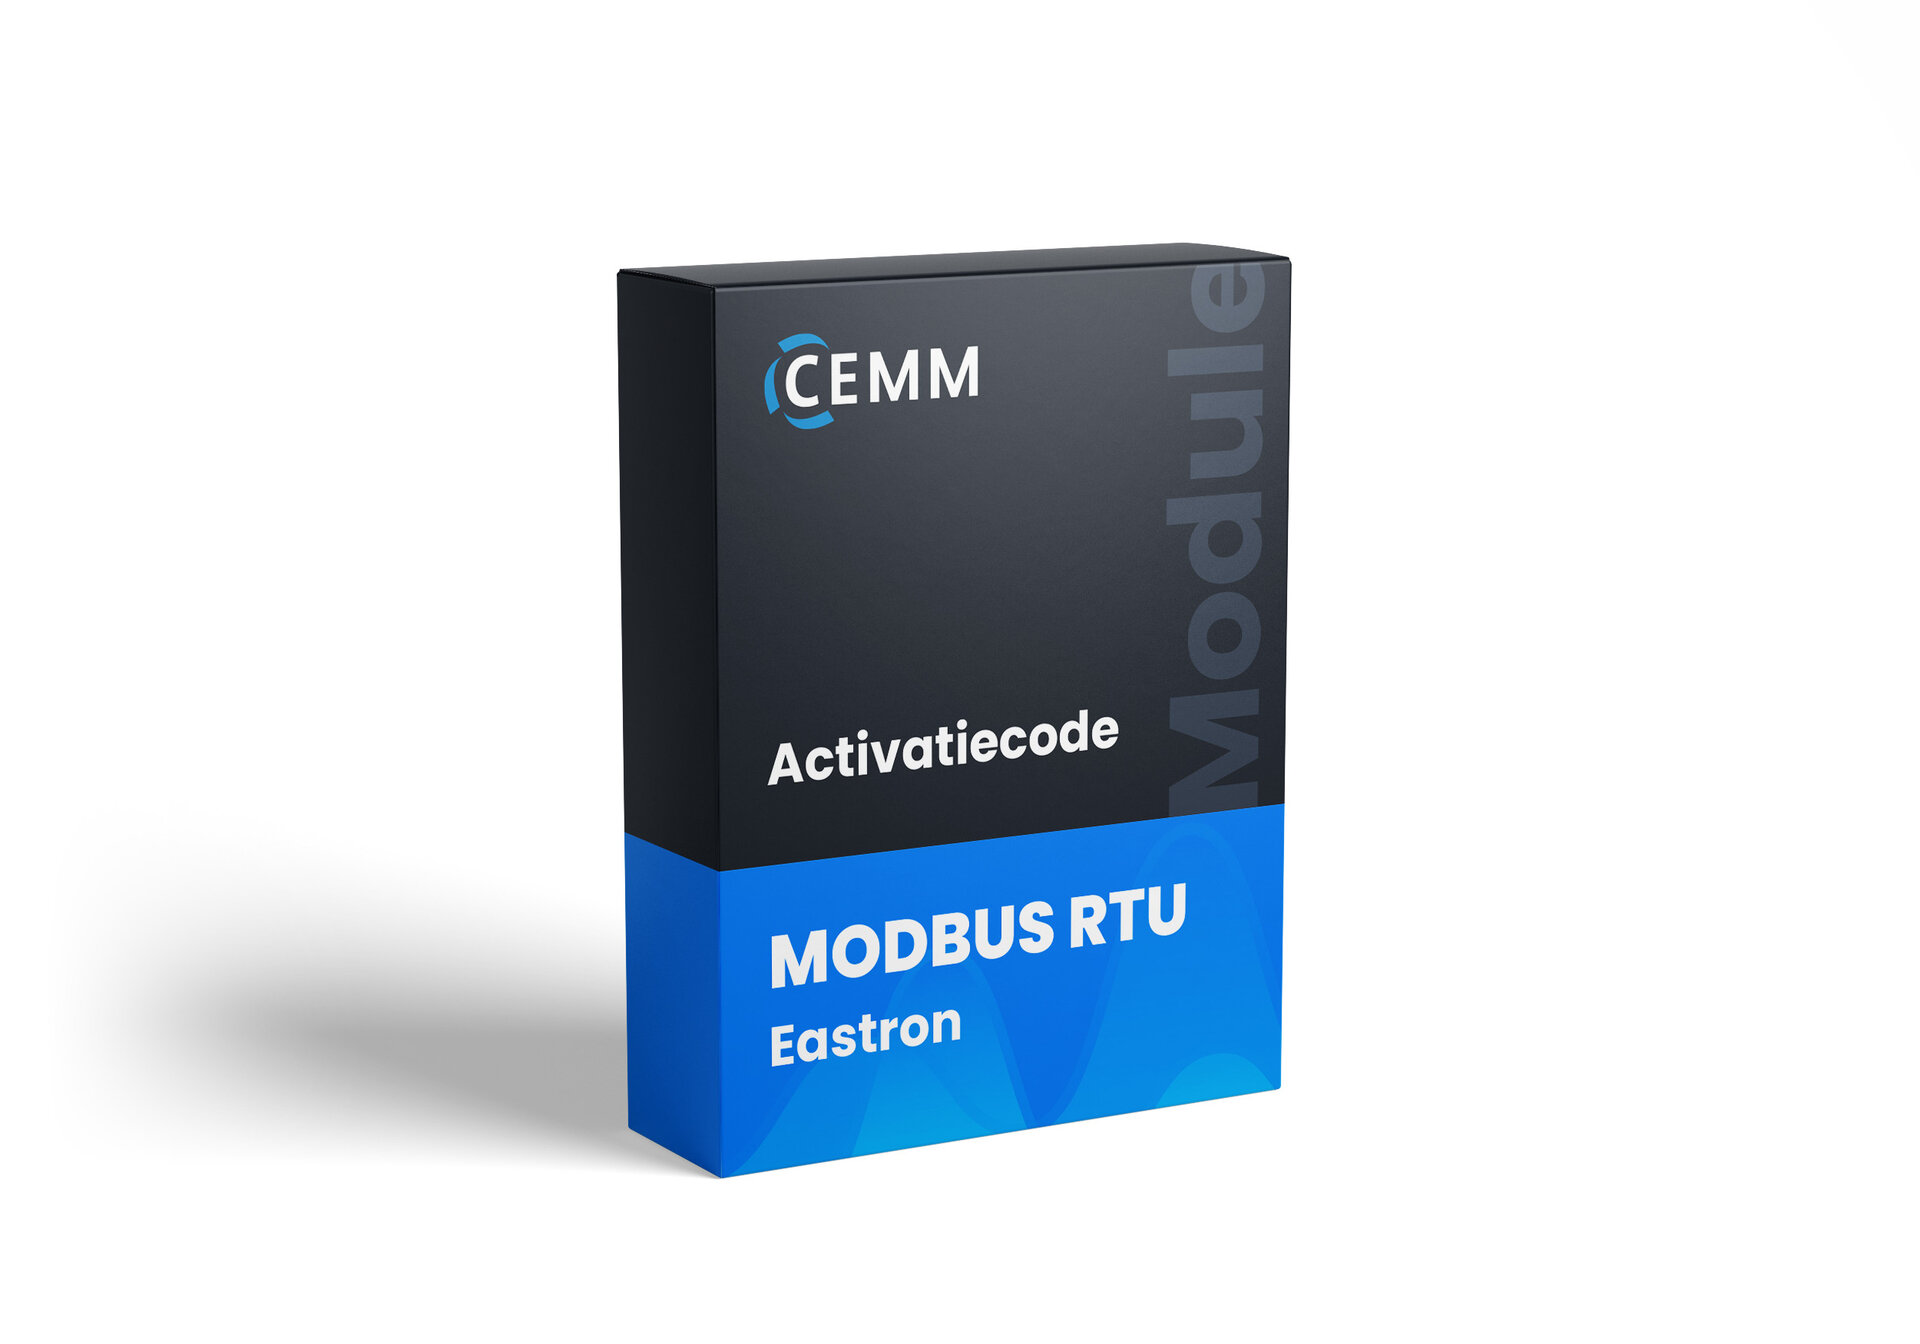 Activatiecode CEMM 3.0 Software module - Modbus RTU Eastron